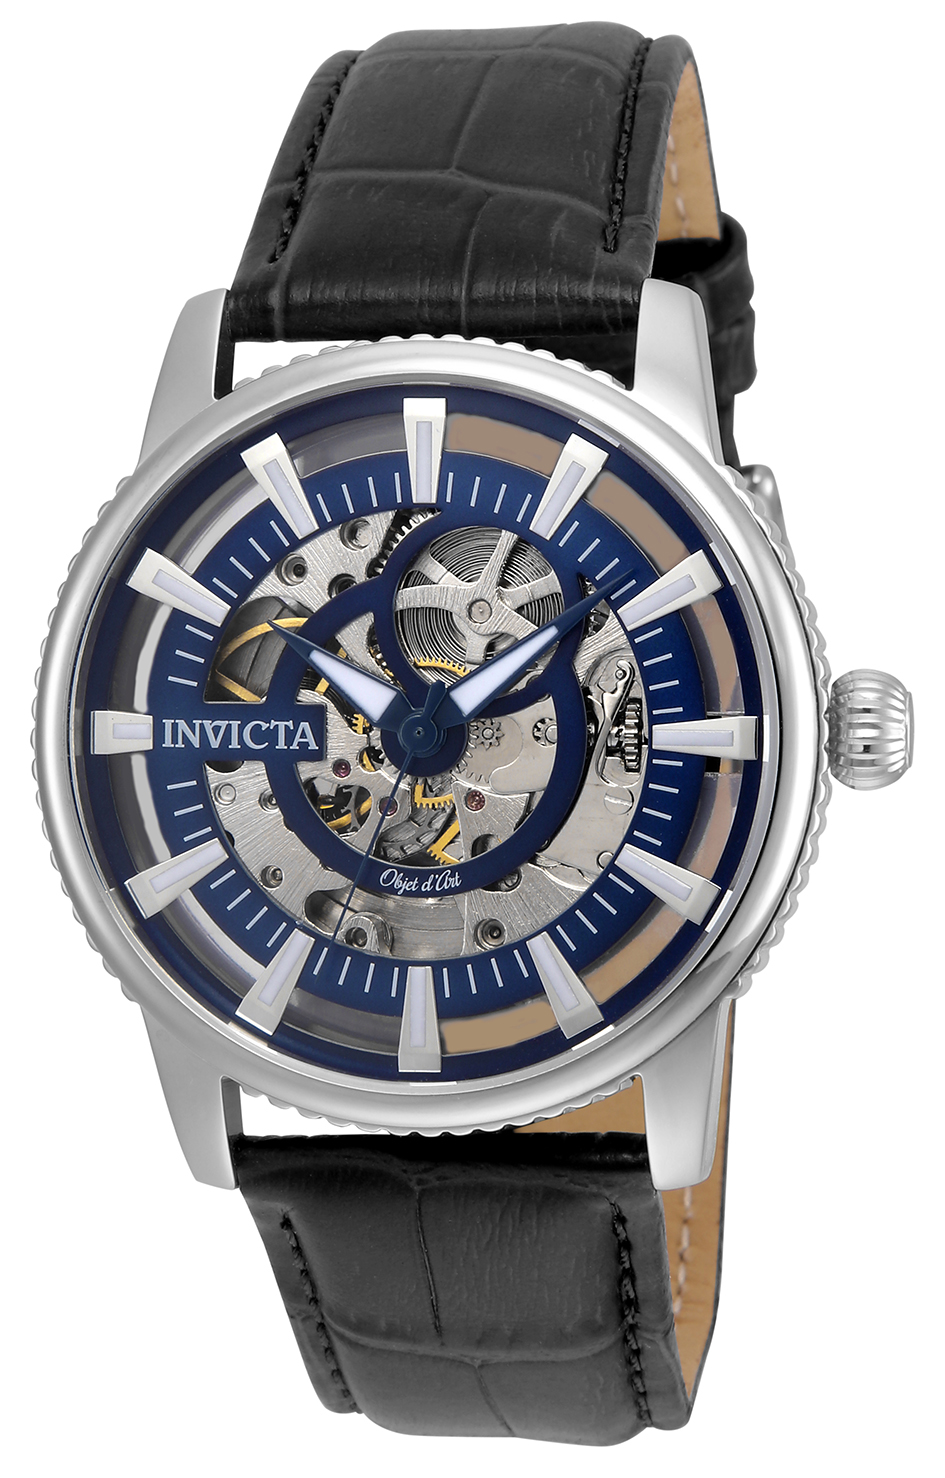 Invicta Objet D Art Automatic Men's Watch - 42mm, Black (22640)